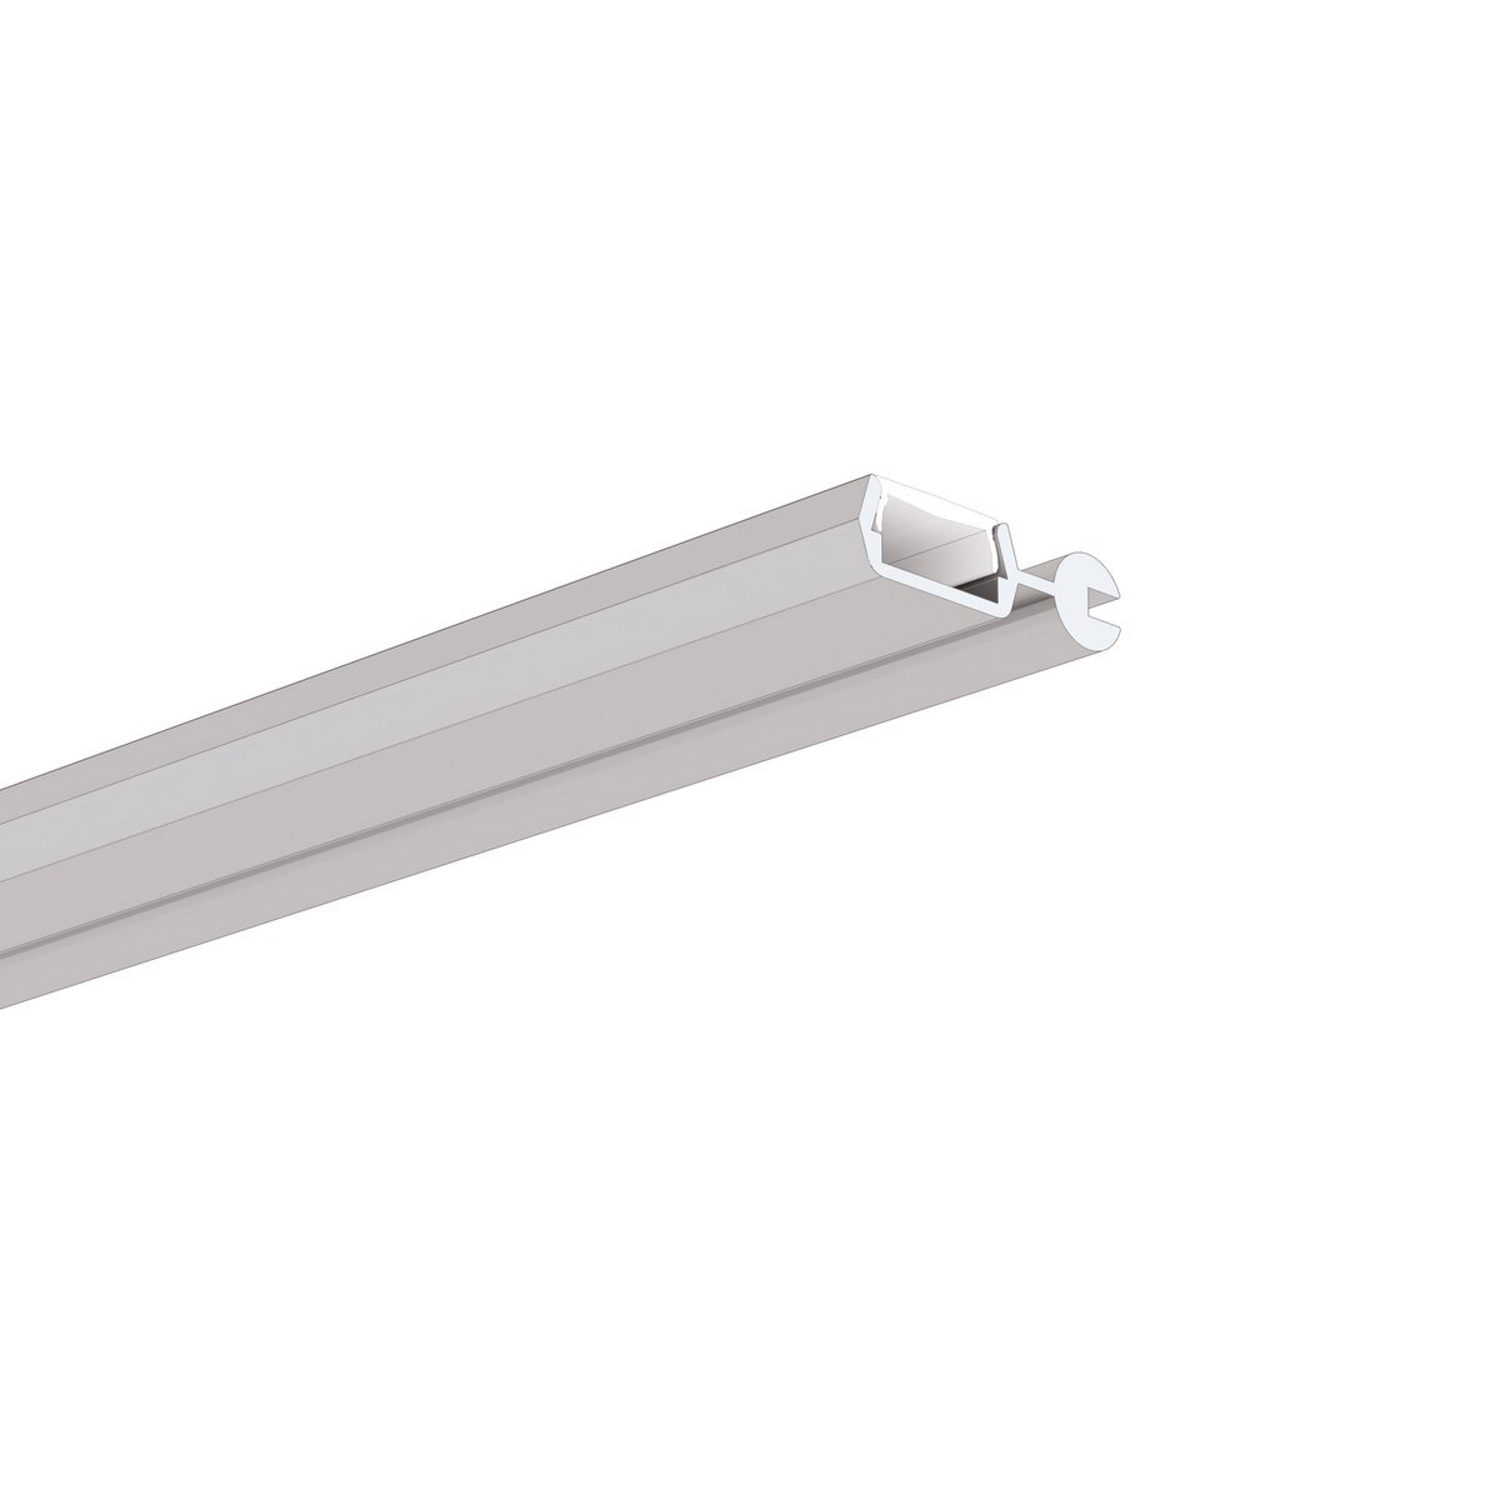 Adjustable Angle LED Cove Light Channel ~ Model Poli